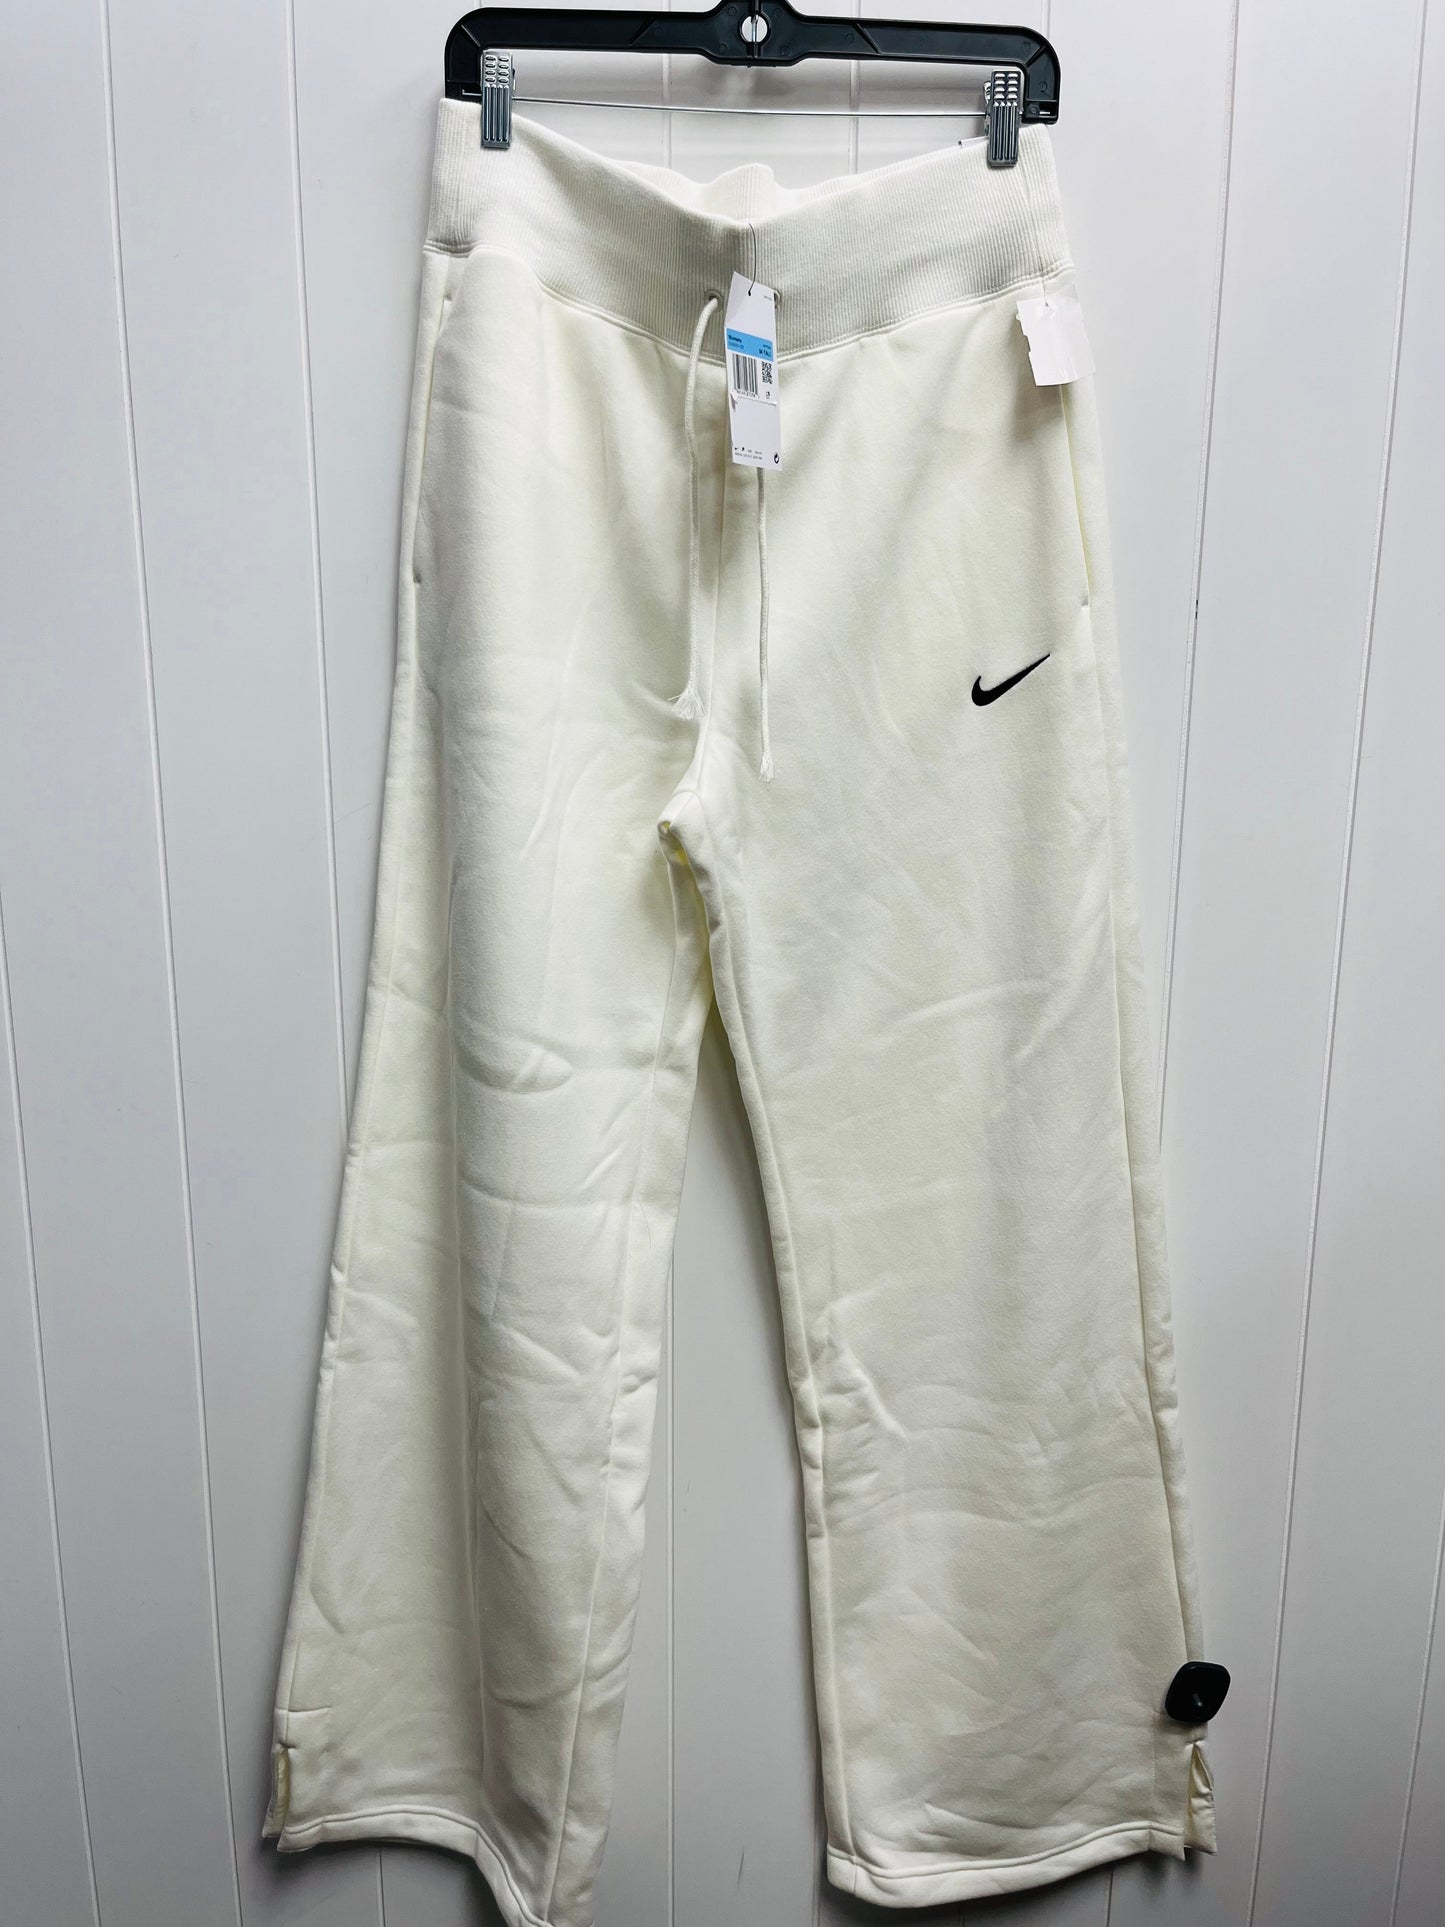 White Athletic Pants Nike Apparel, Size M